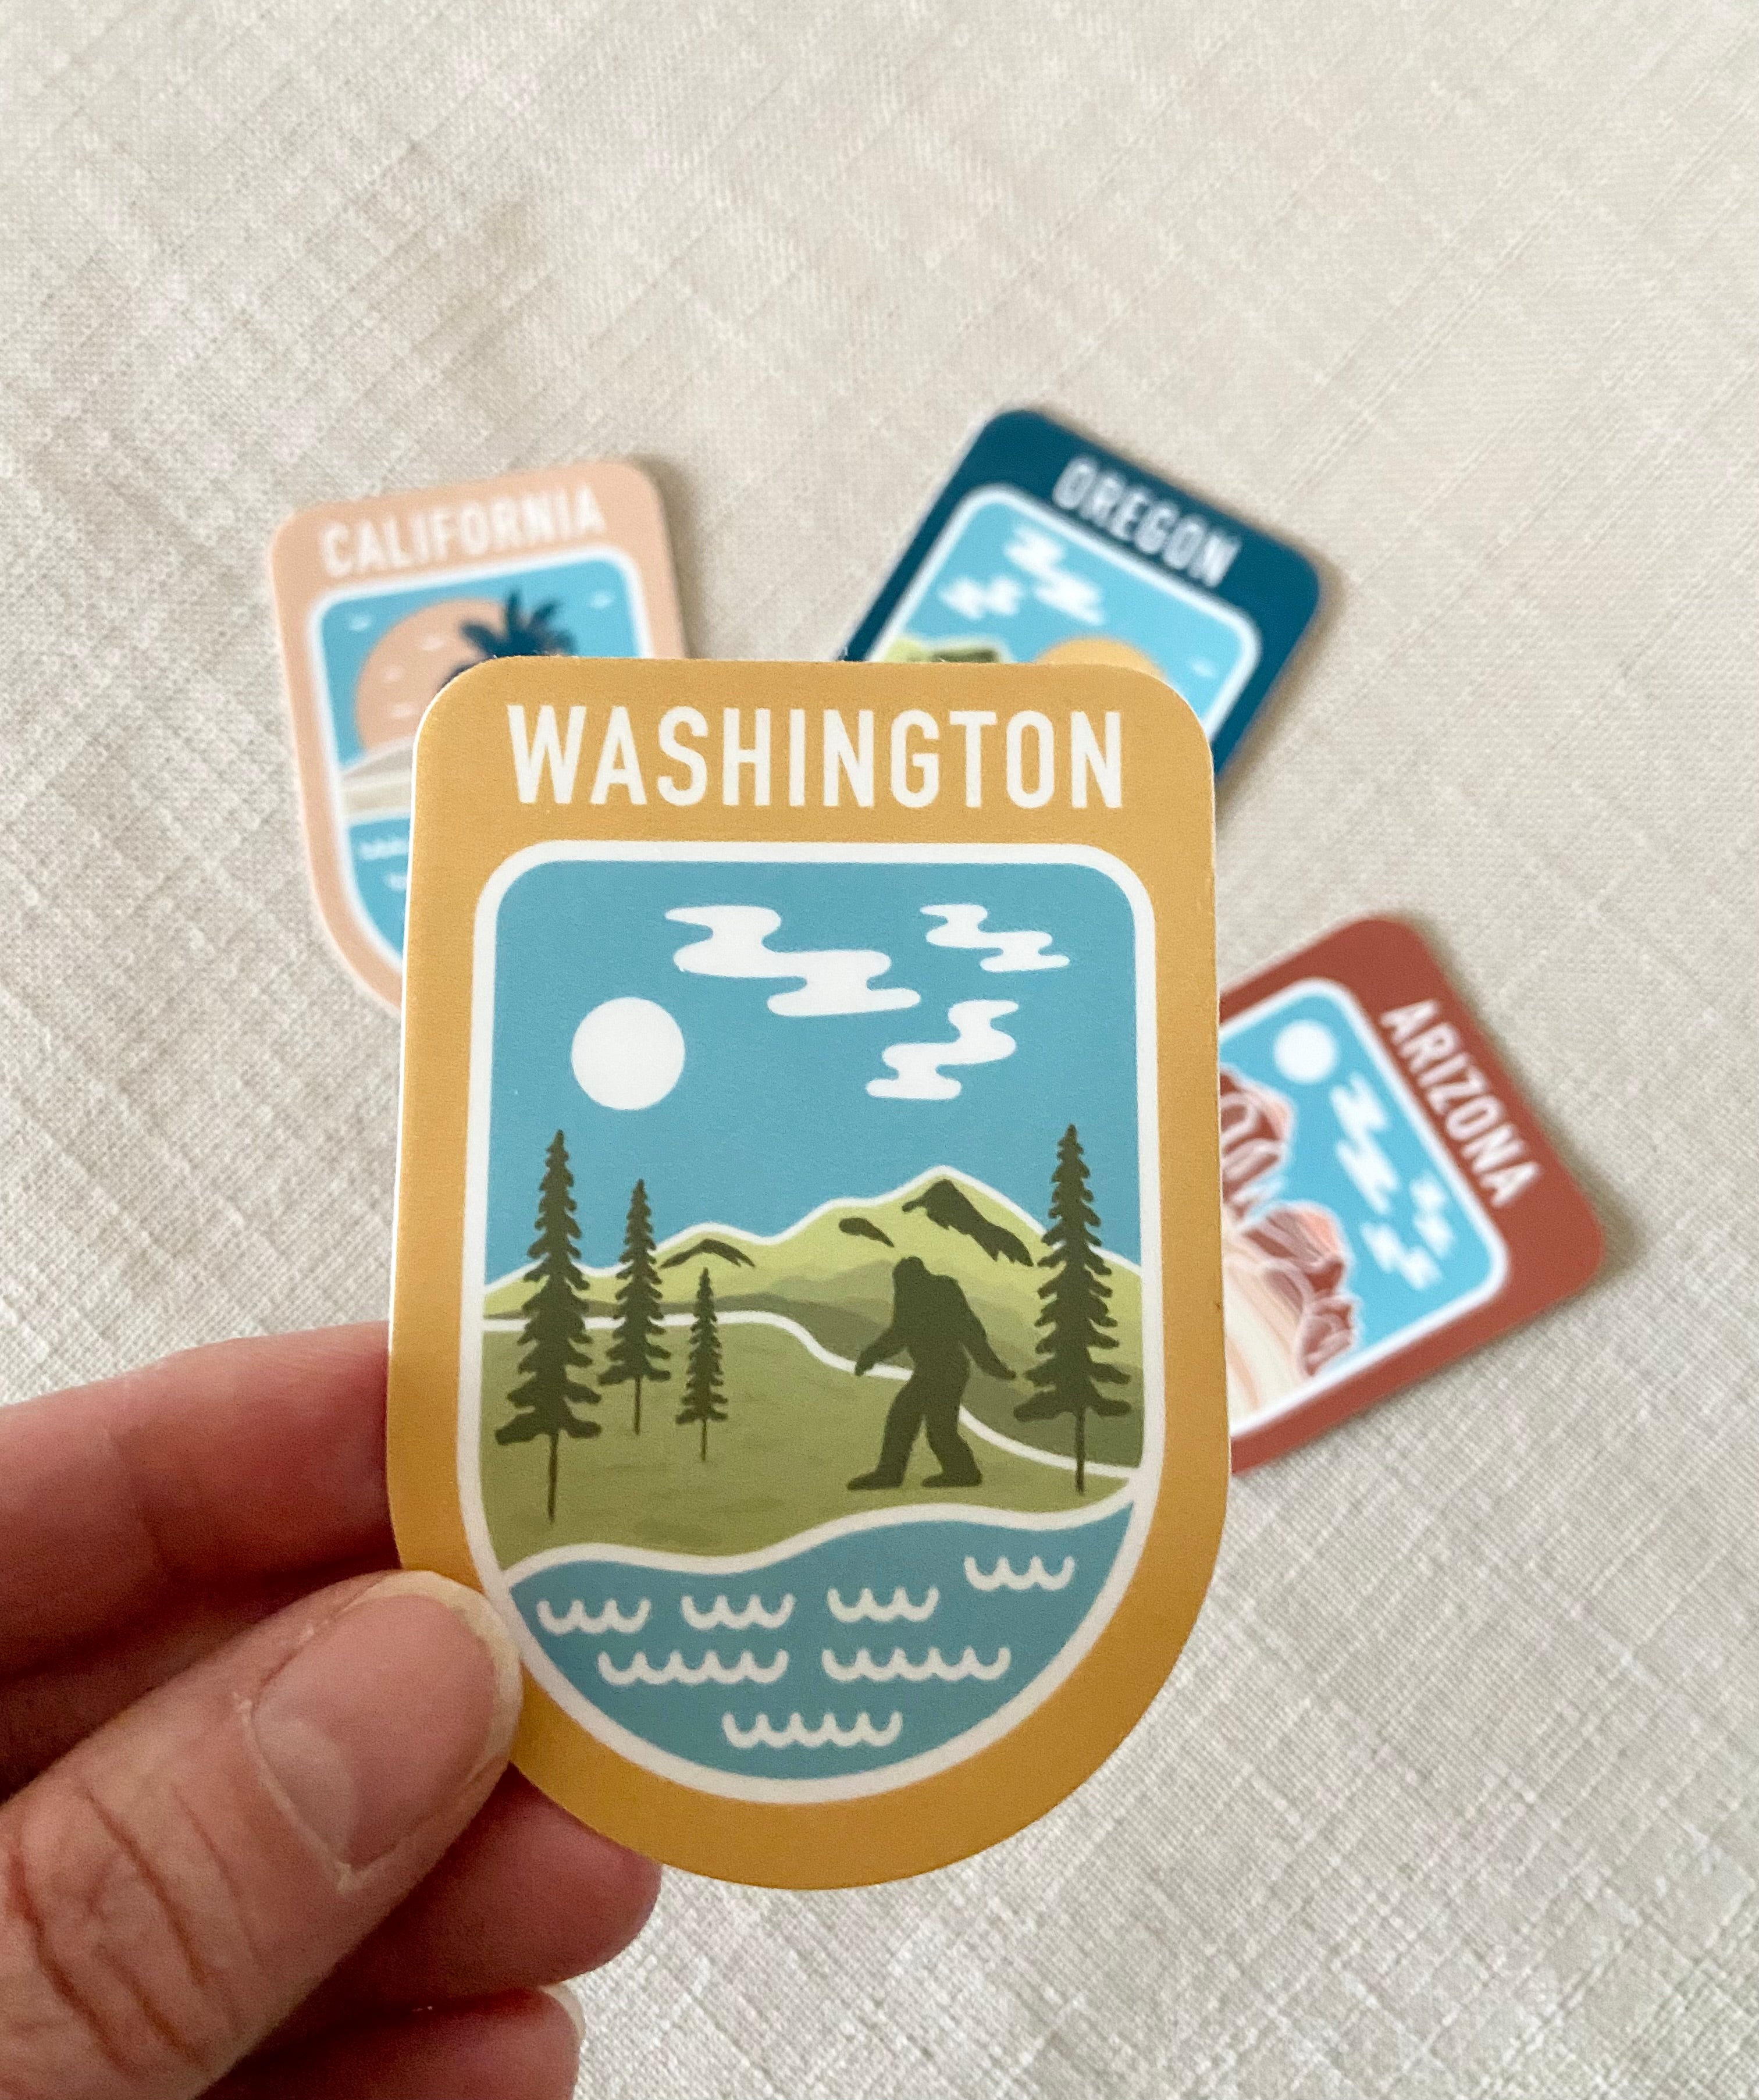 State Scenic Route Washington - Vinyl Sticker